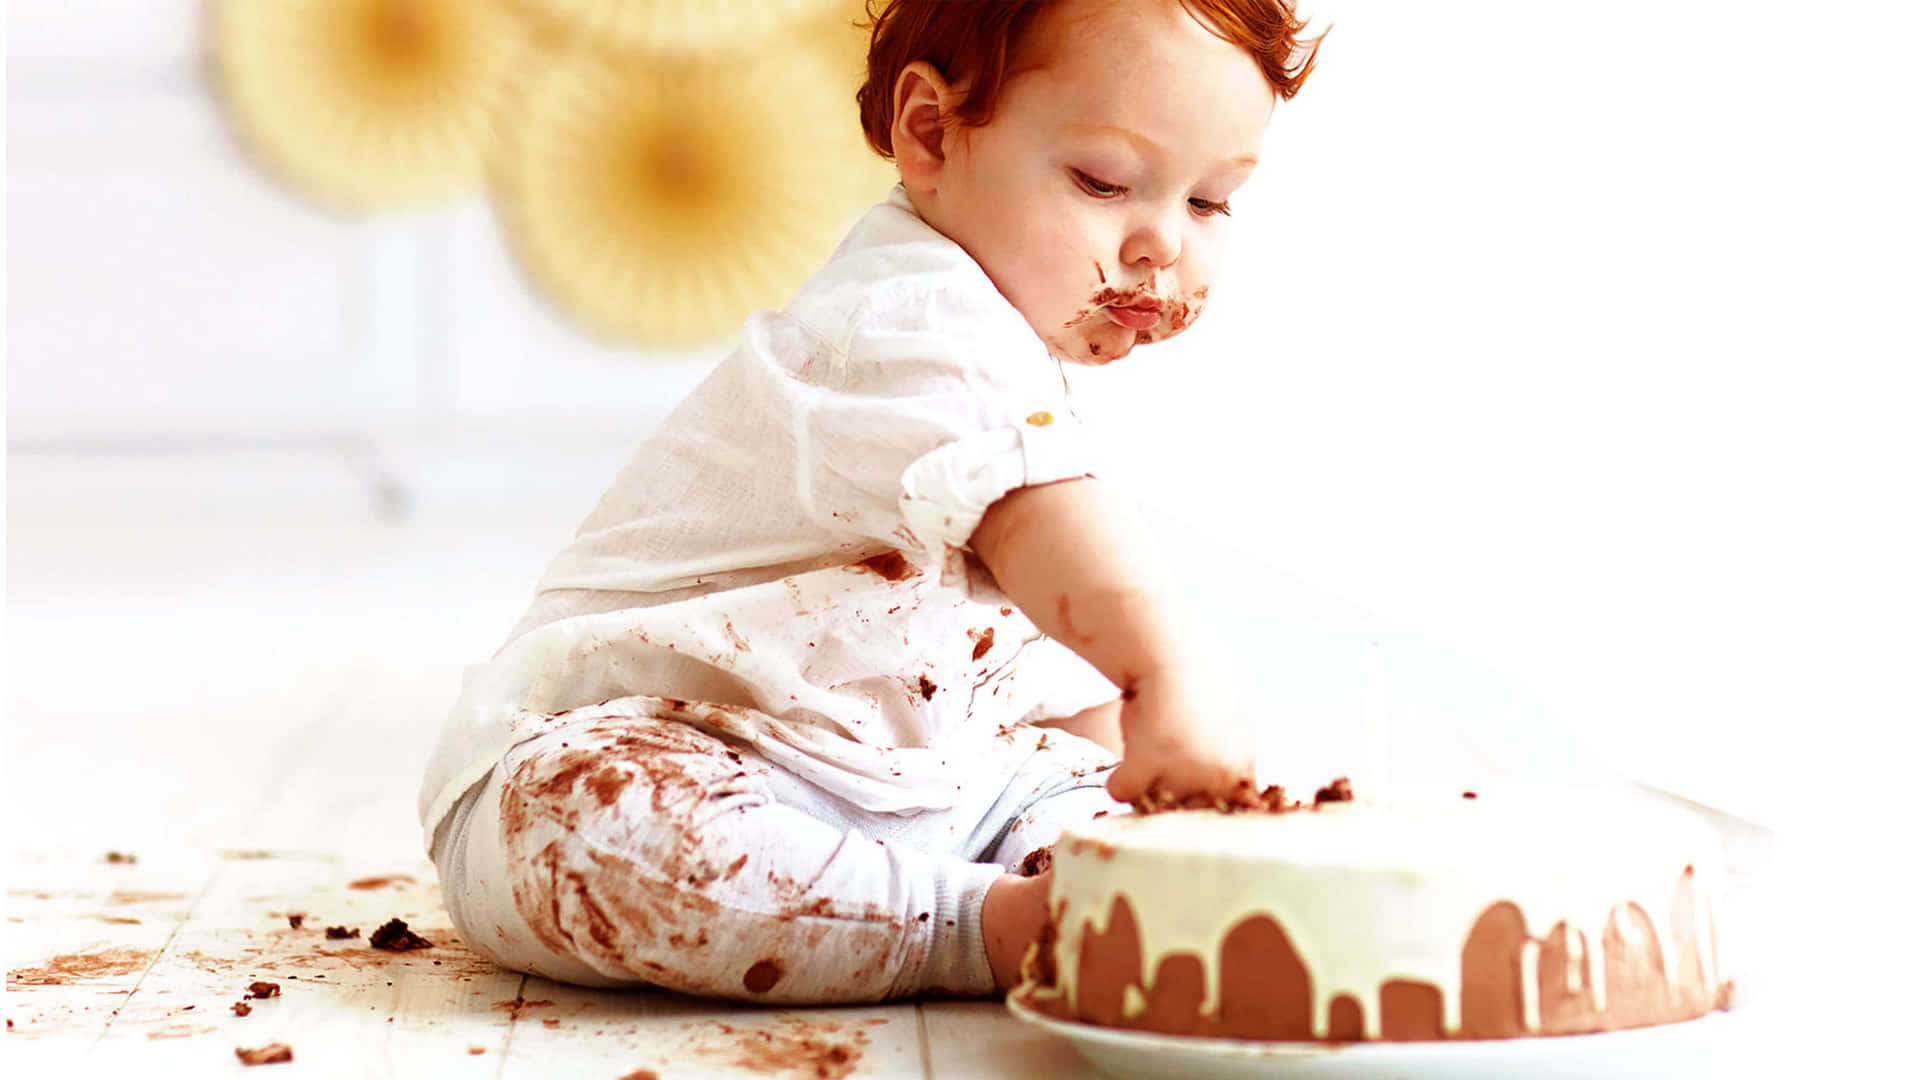 Cake Smash Baby Boy Picture